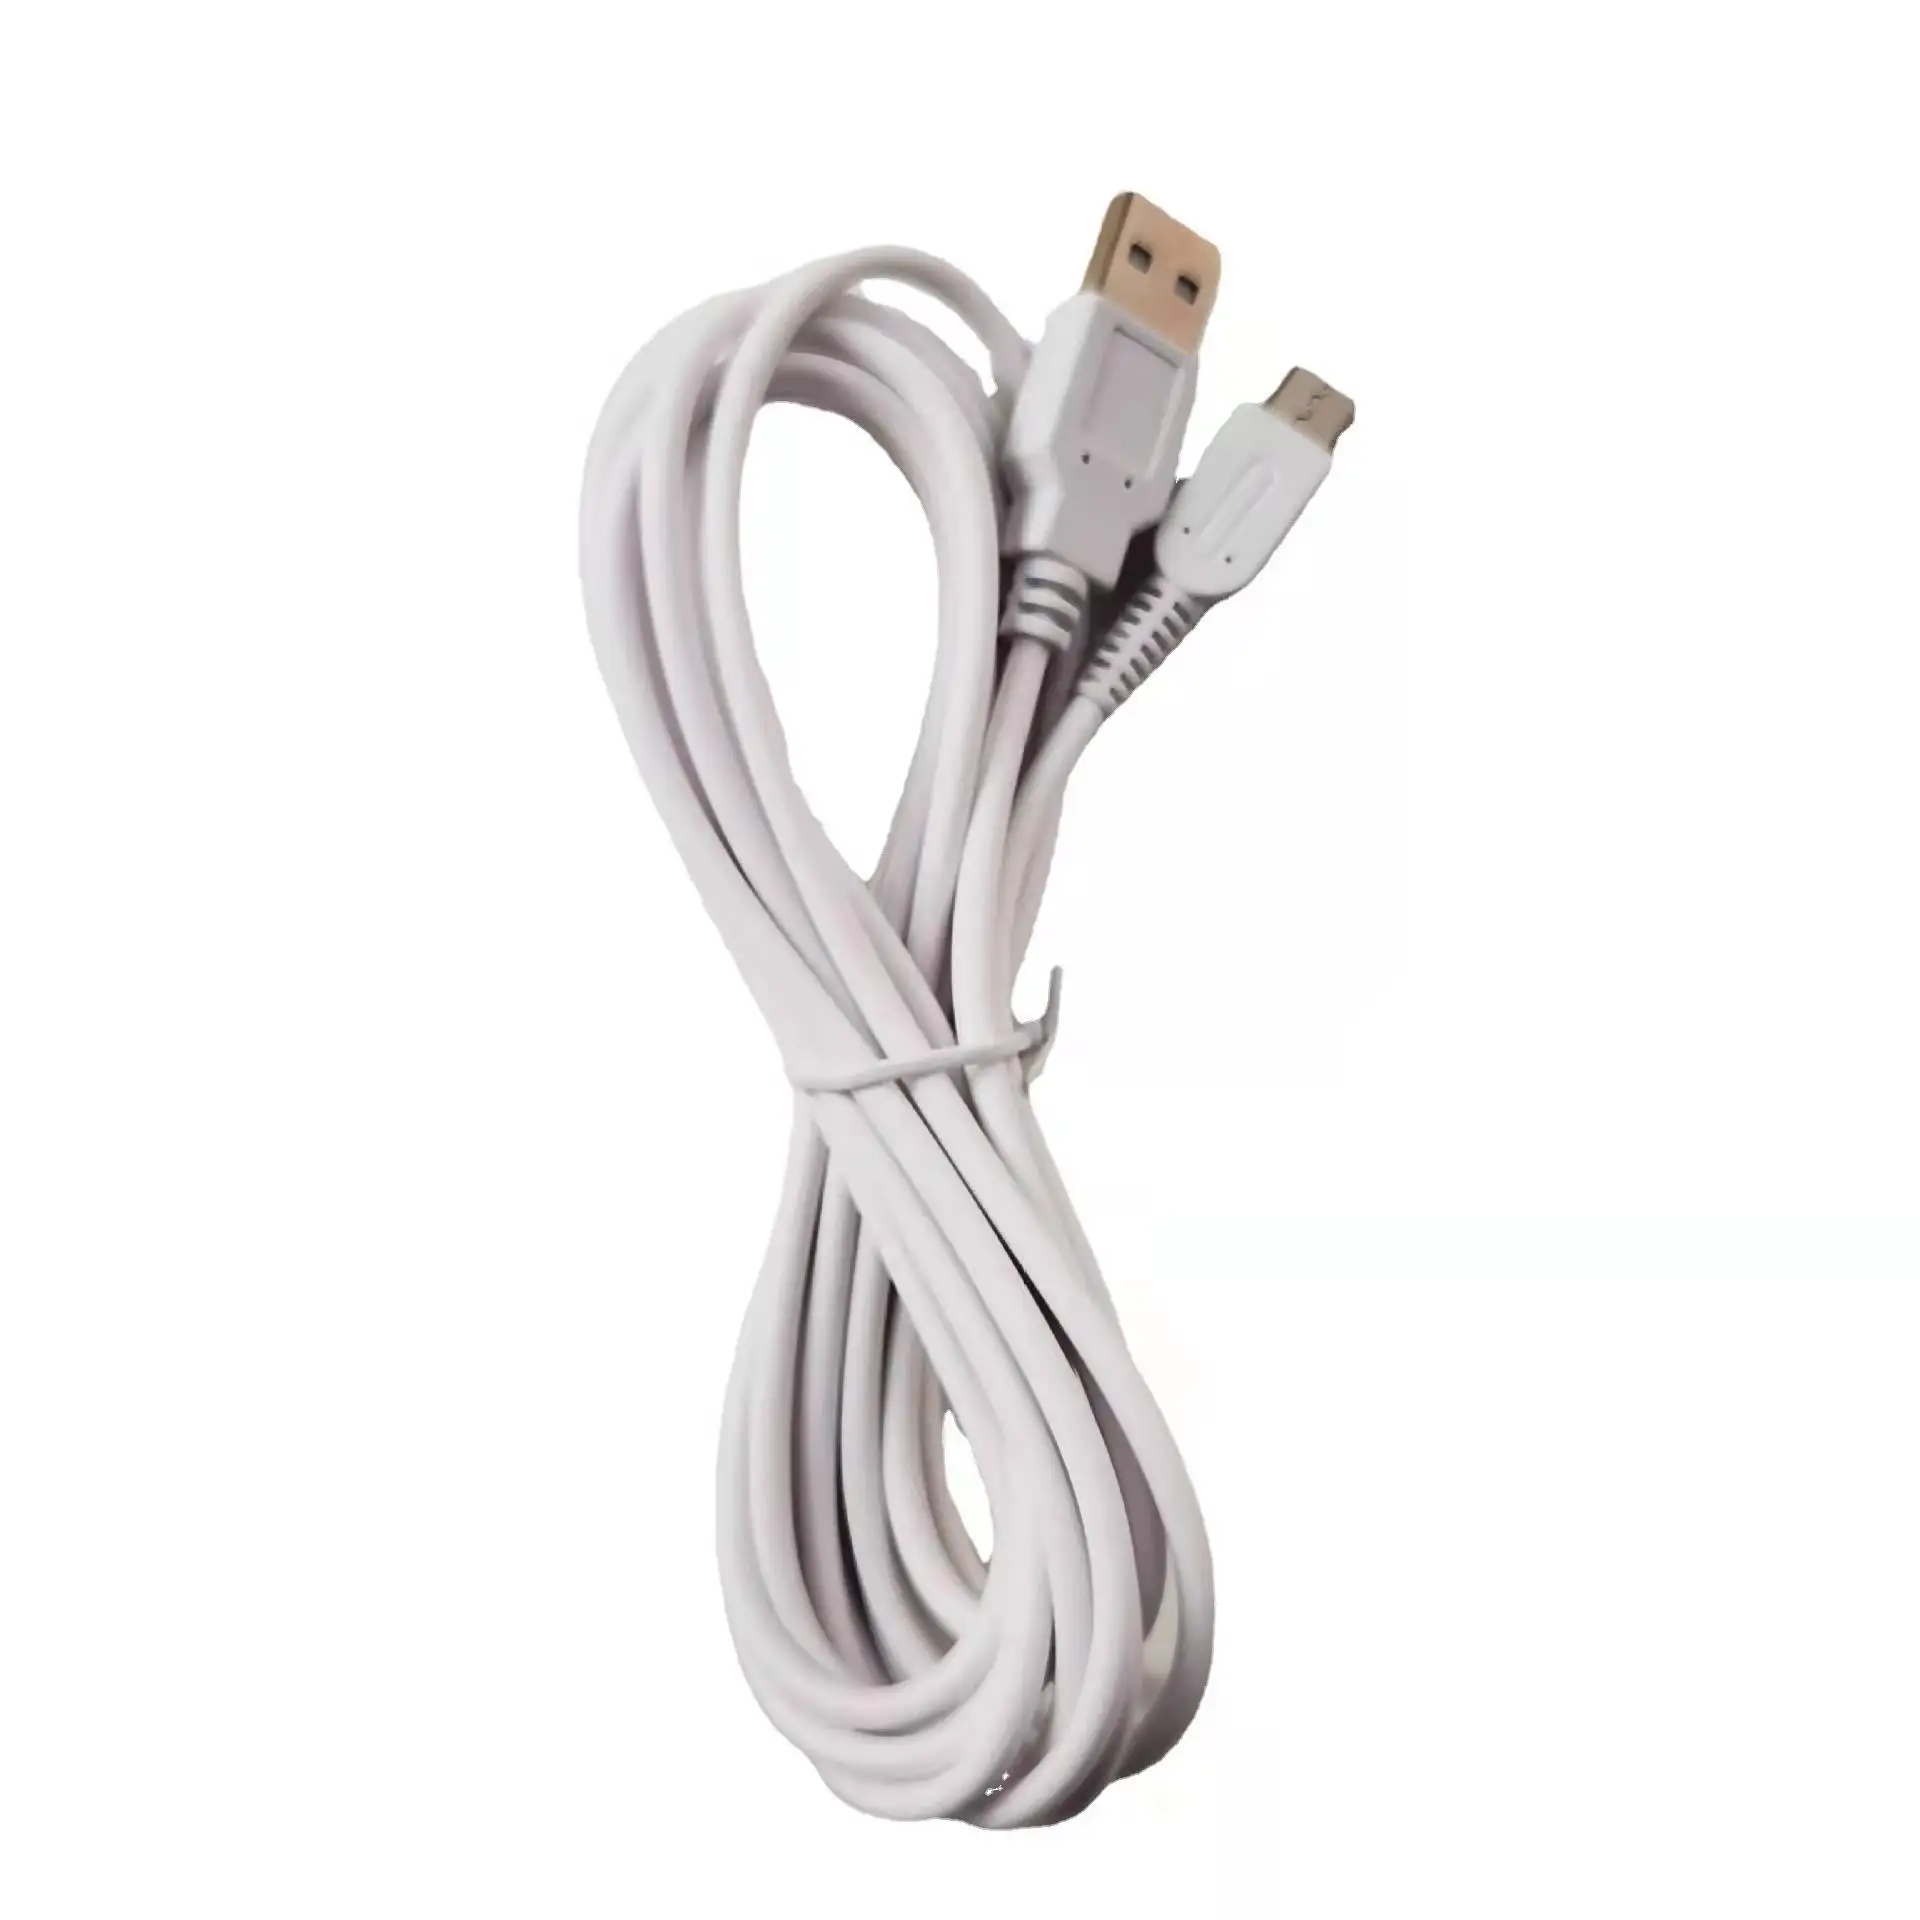 

100Pcs/ lots 3M USB Charging Cable USB Data Power Charger For Nintendo Wii U WIIU Gamepad Controller